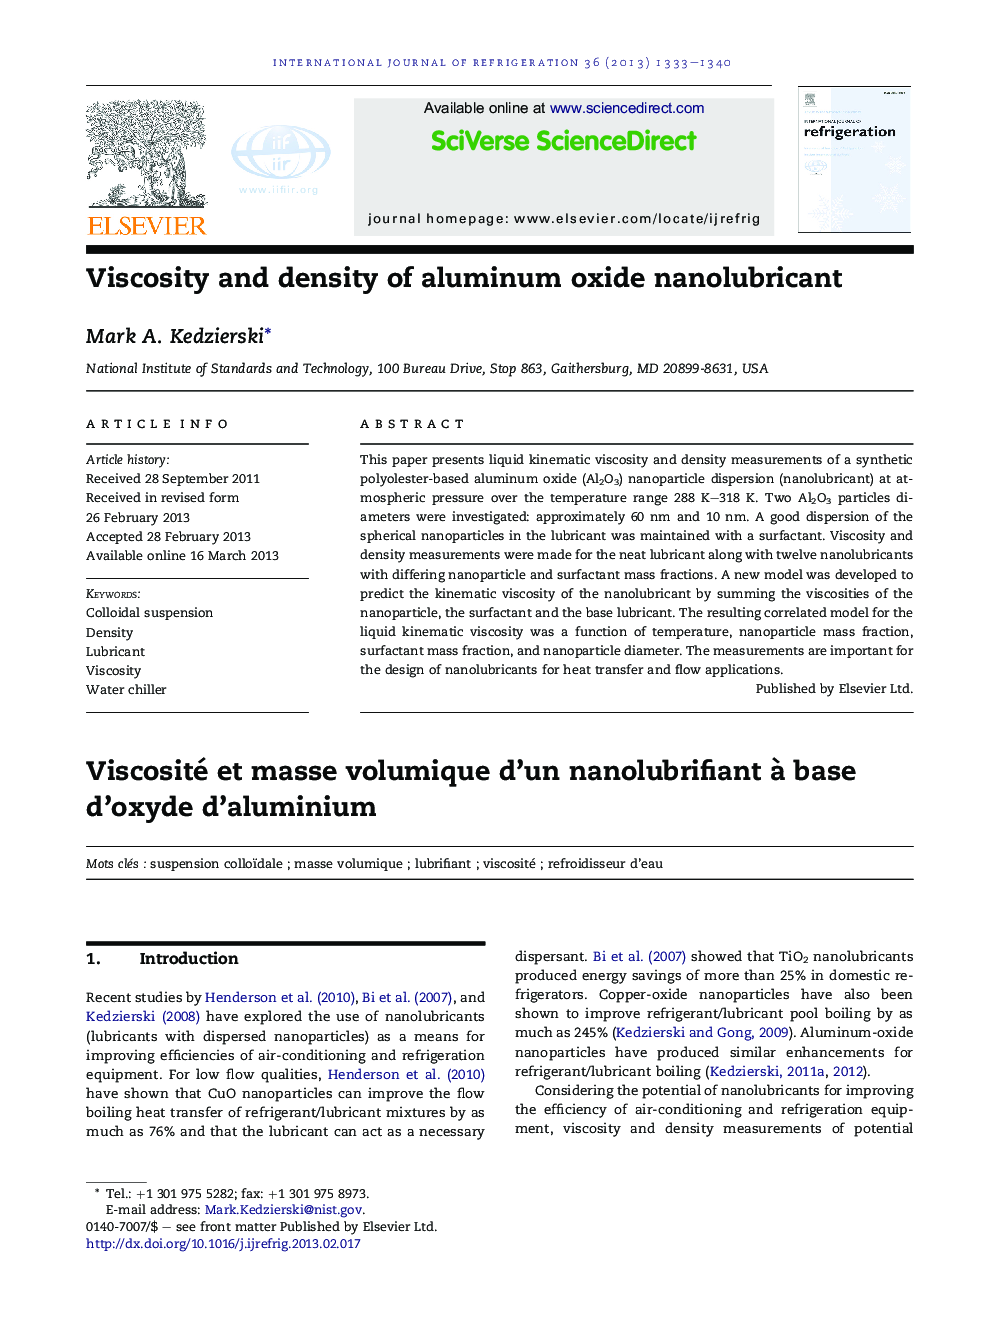 Viscosity and density of aluminum oxide nanolubricant